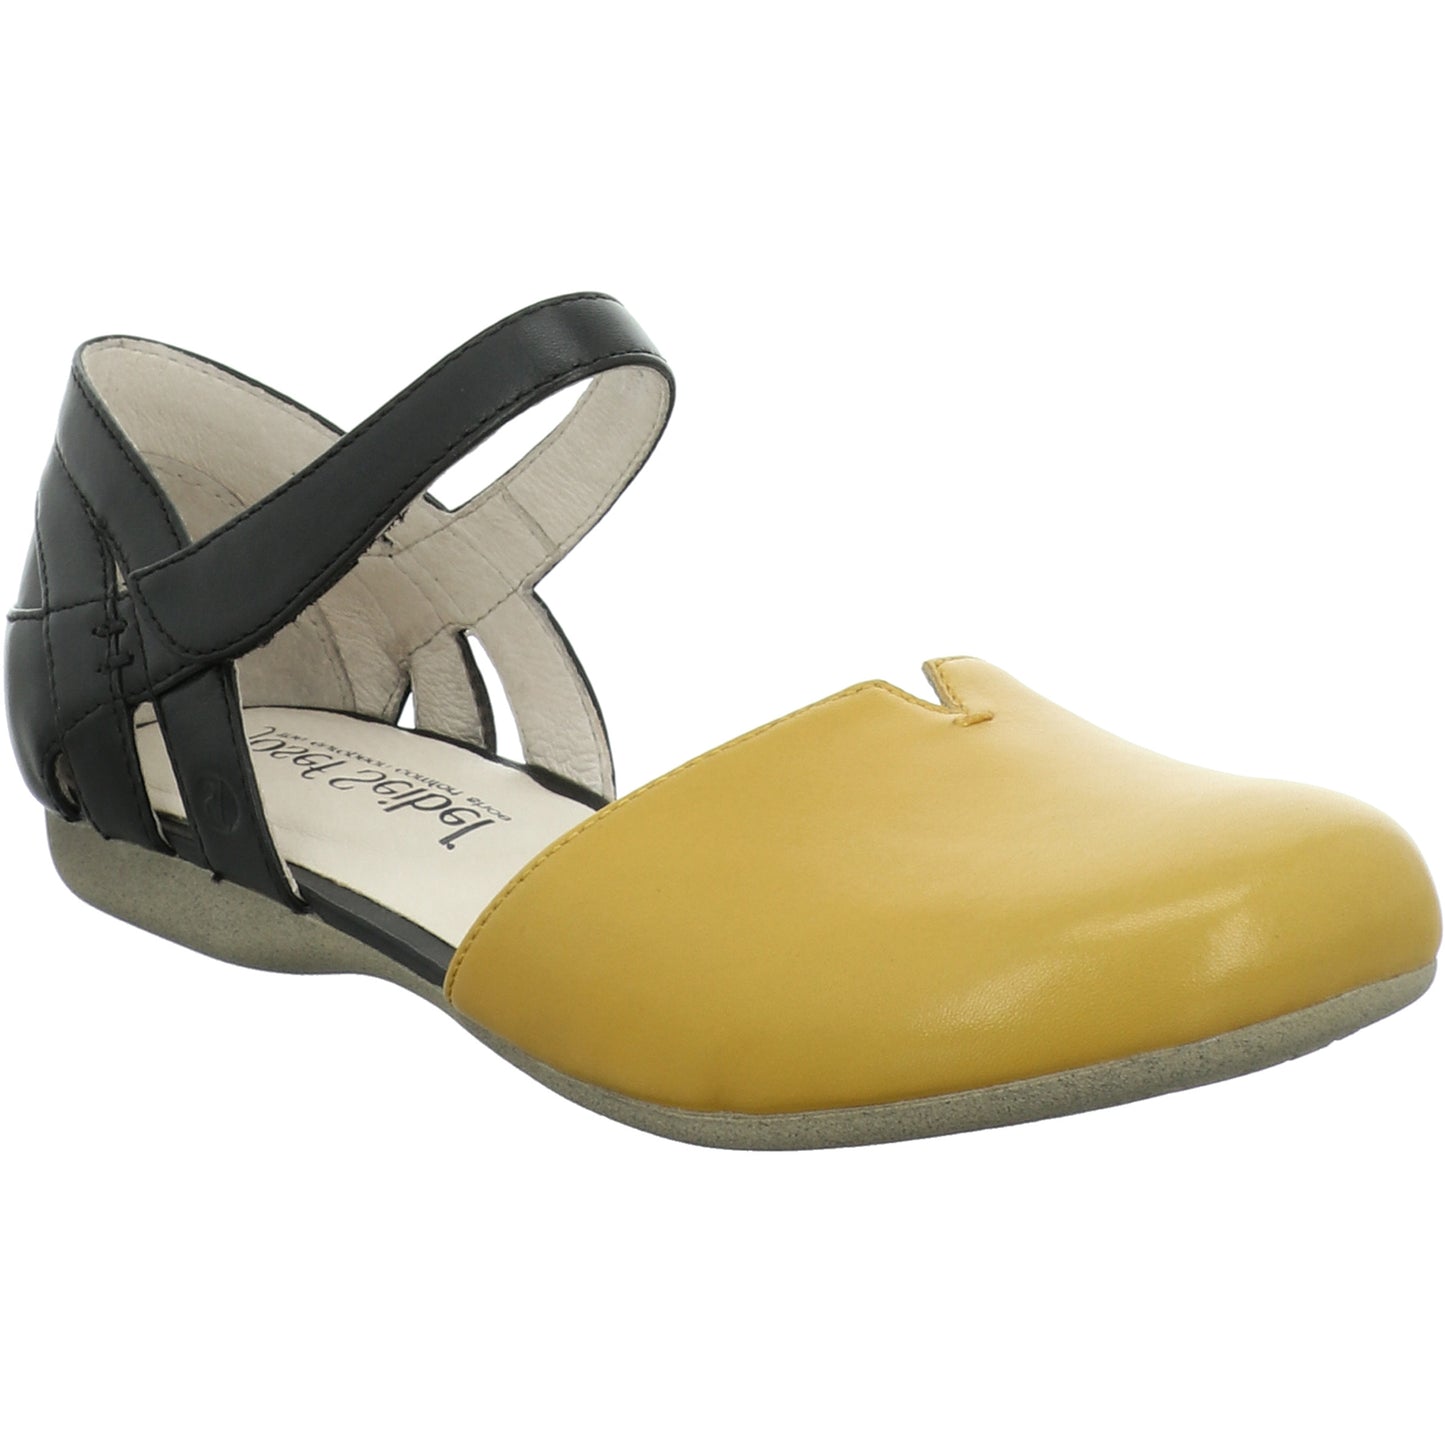 Josef Seibel Women's Fiona 67 Leather Pump Shoes Gelb Yellow Combi